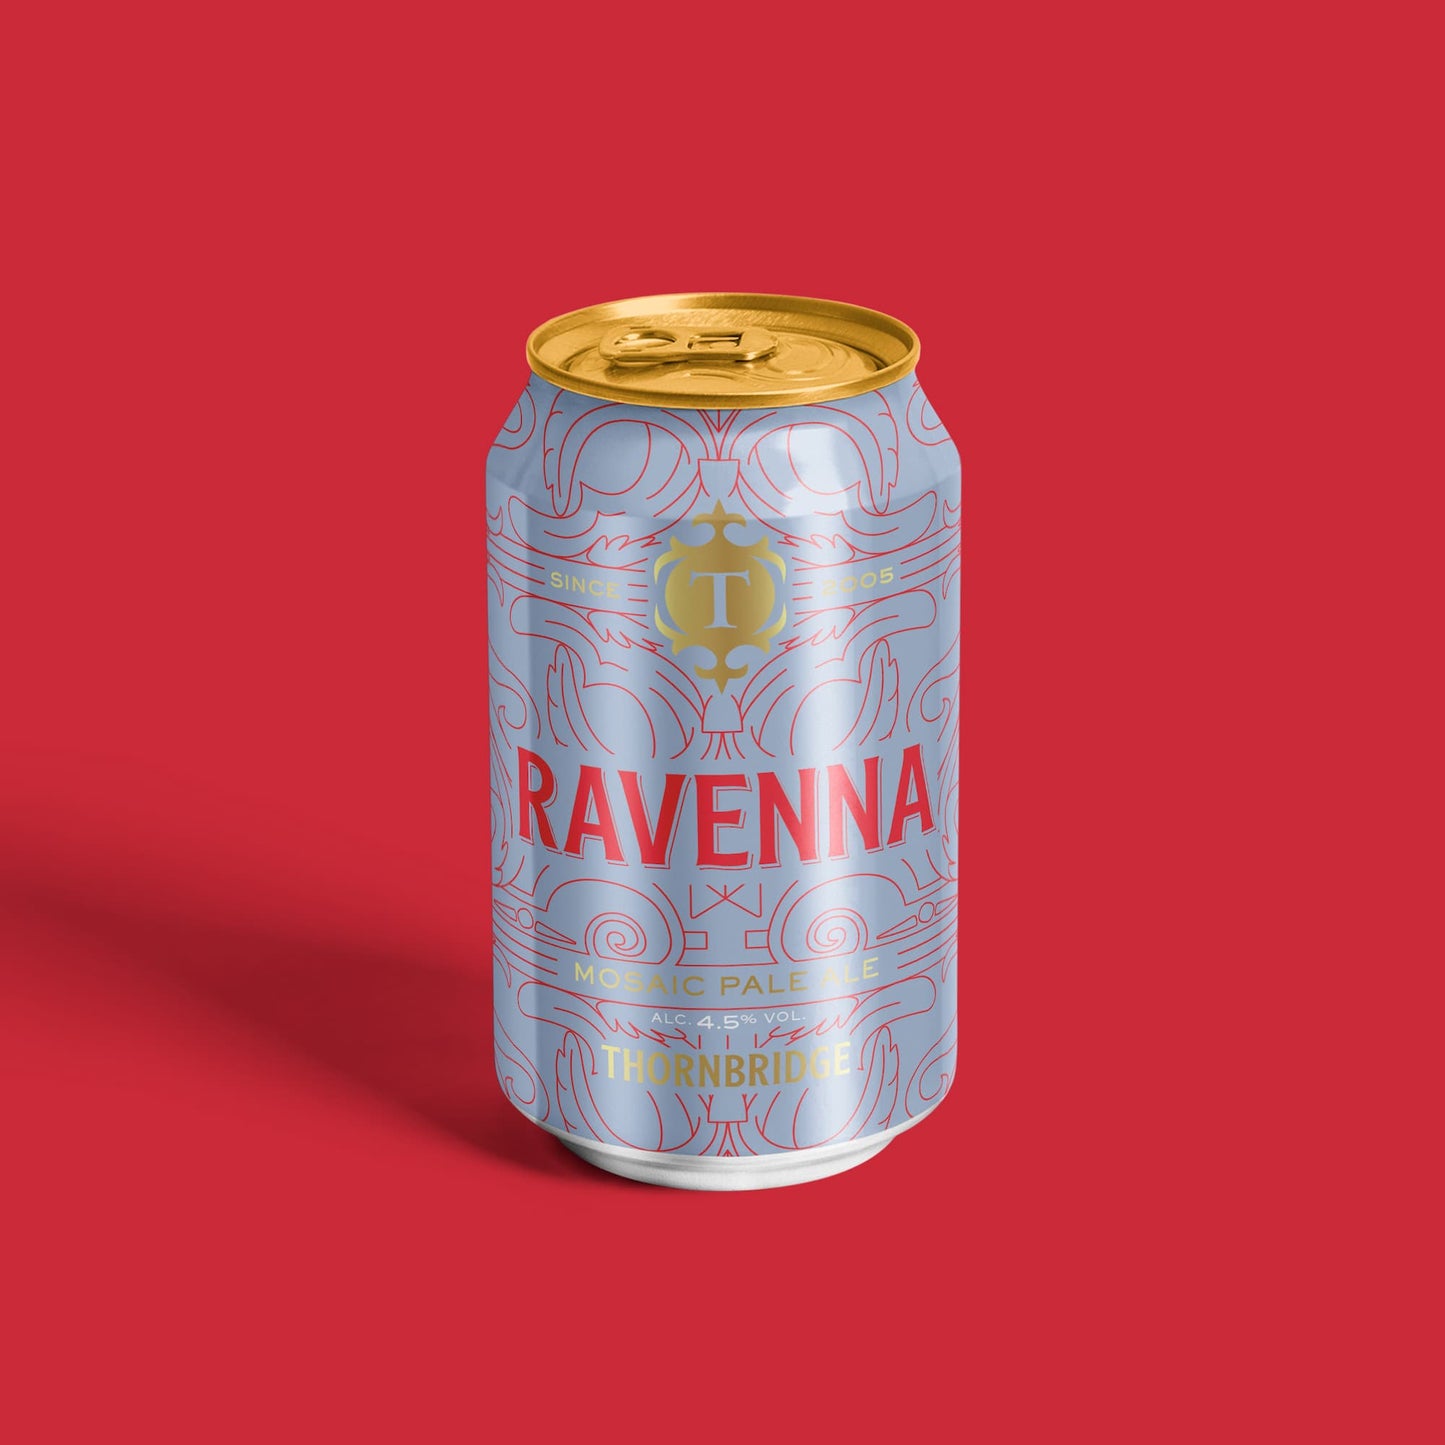 Ravenna, 4.5% Hazy Mosaic Pale Ale Beer - Single Can Thornbridge